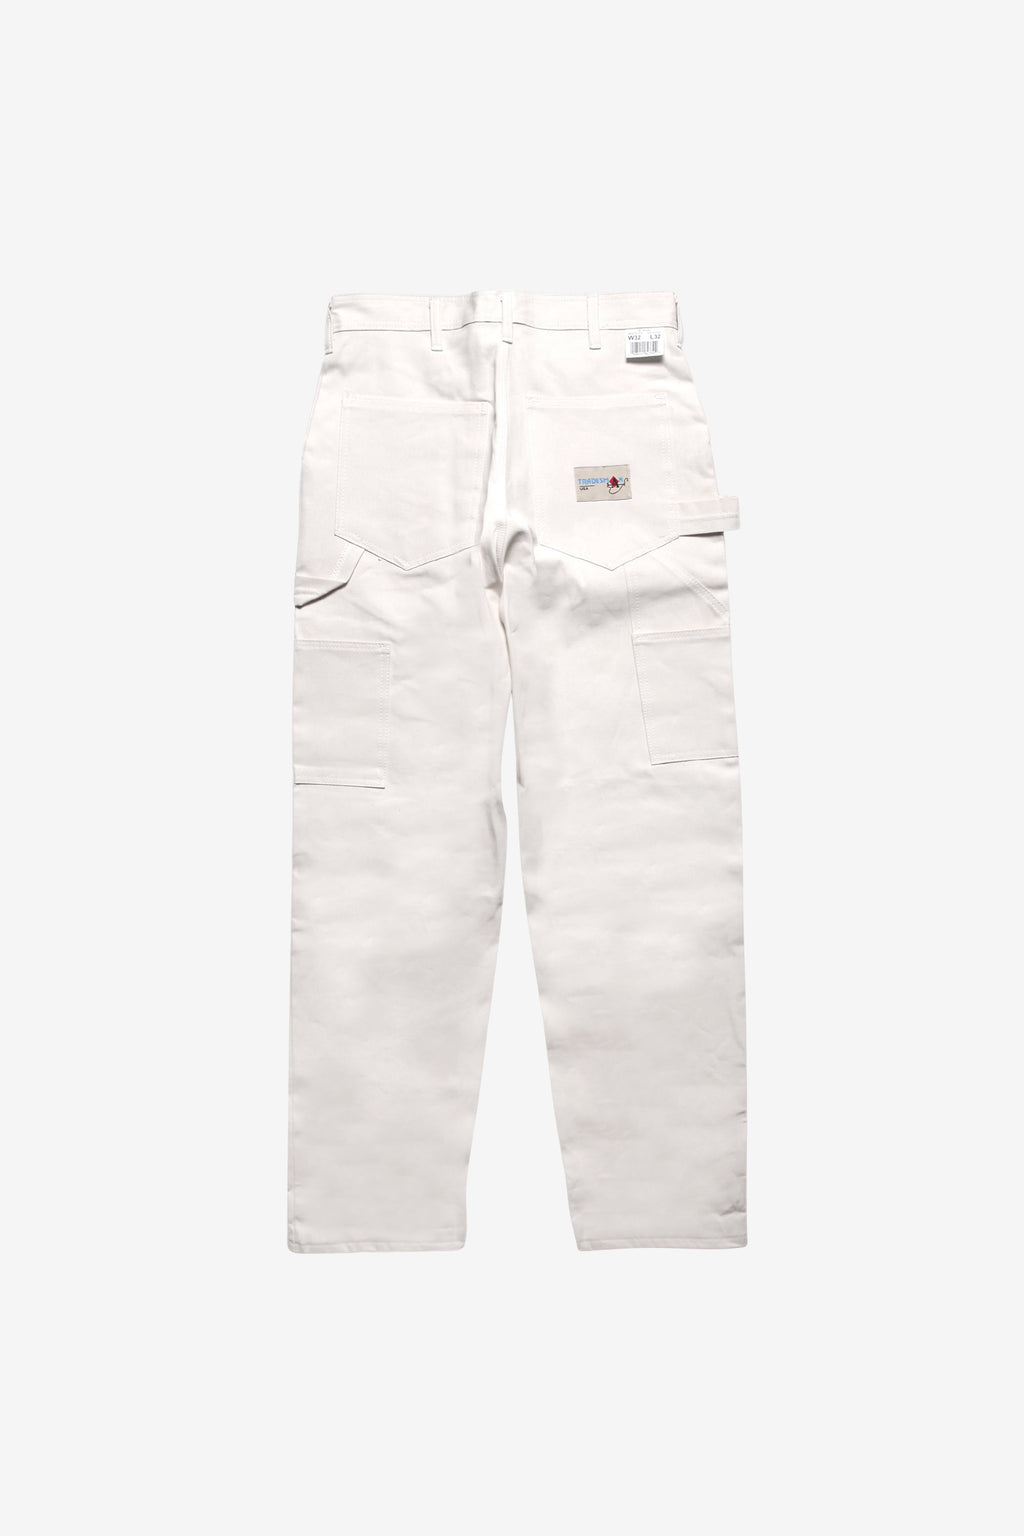 Ace Drop Cloth Tradesman Carpenter Pants - White | Blacksmith Store